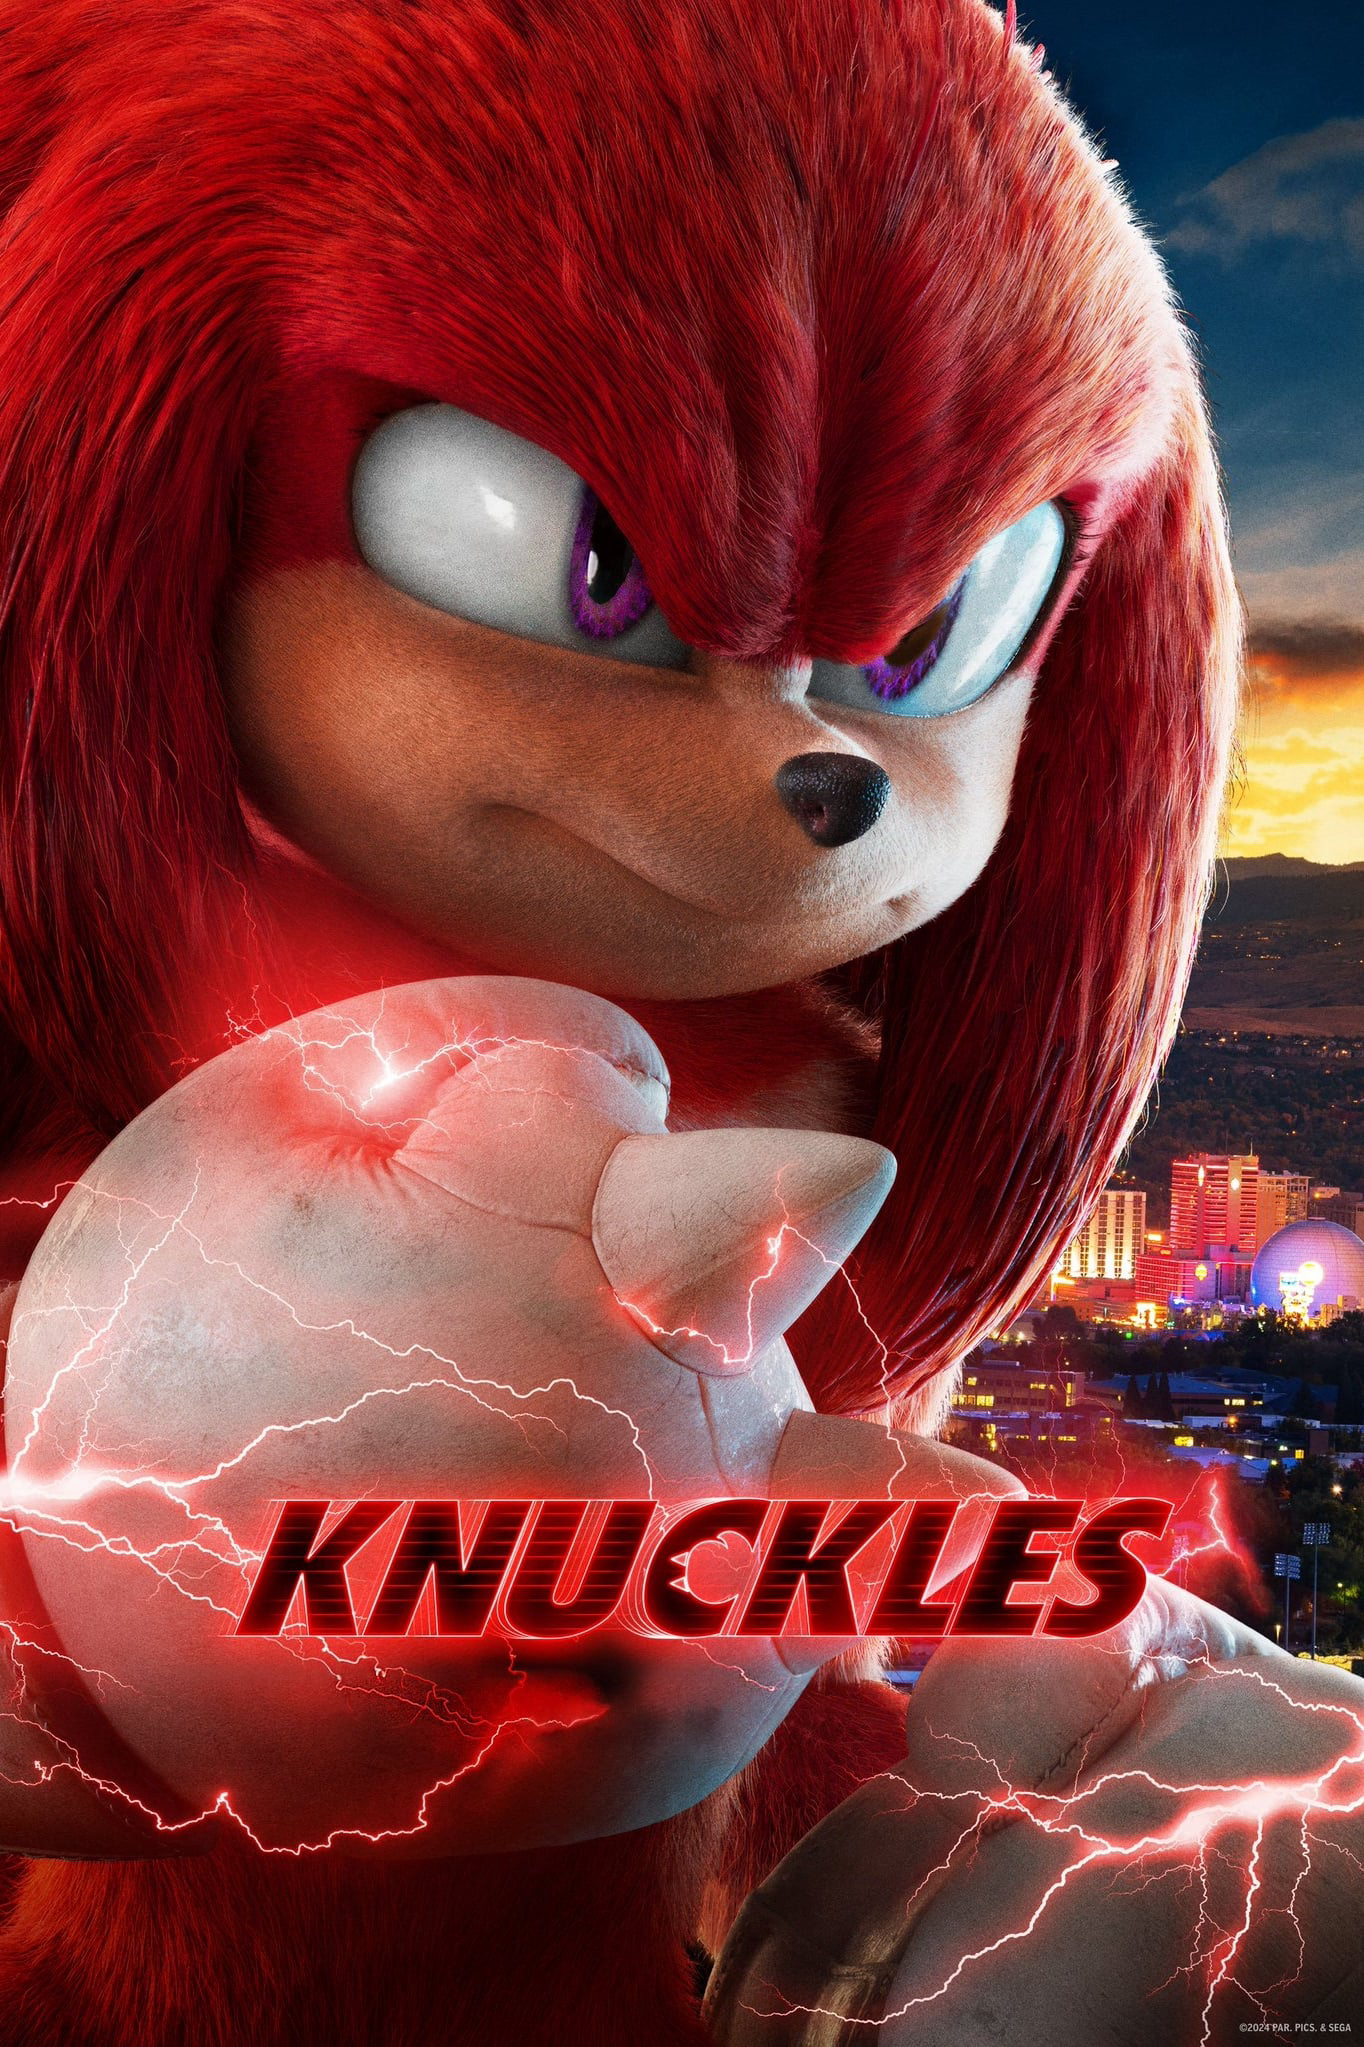 Poster Phim Knuckles (Knuckles)